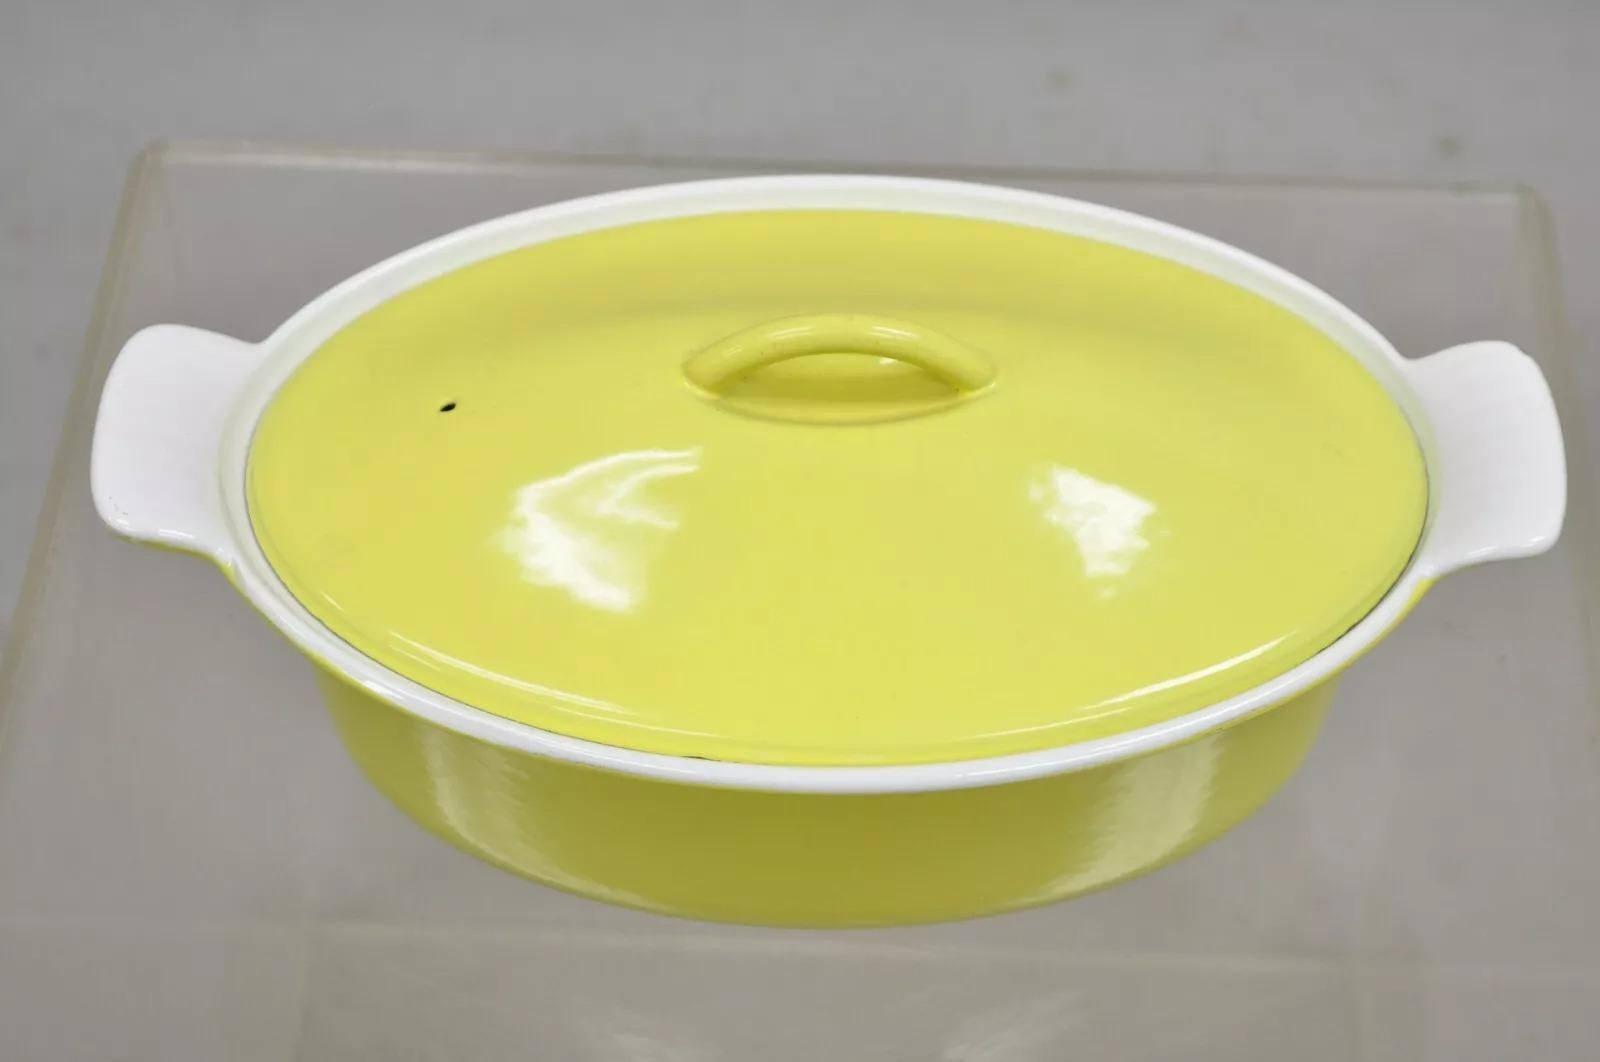 Vintage Descoware Belgium Yellow Cast Iron Enamel Oval Lidded Casserole Pot In Good Condition For Sale In Philadelphia, PA